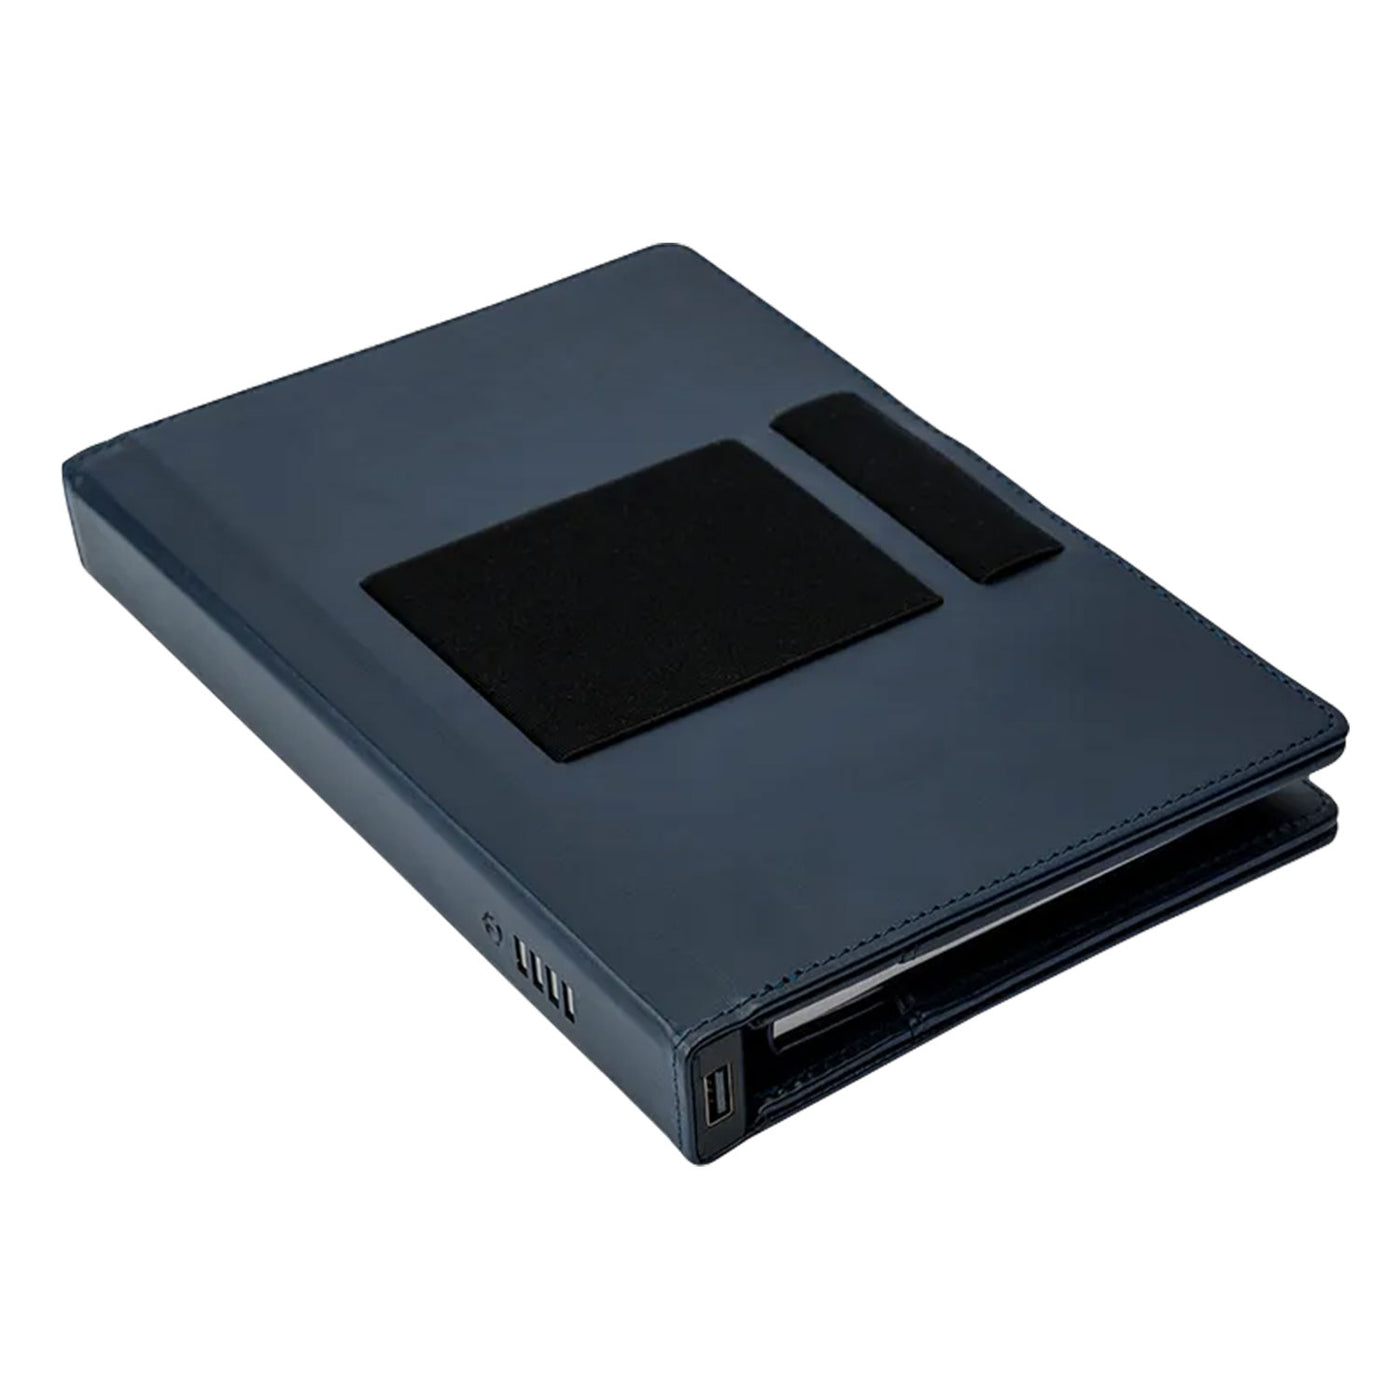 Pennline Superbook Edge Organizer with Fast Wireless Charging + 8000 mAh Powerbank - Blue